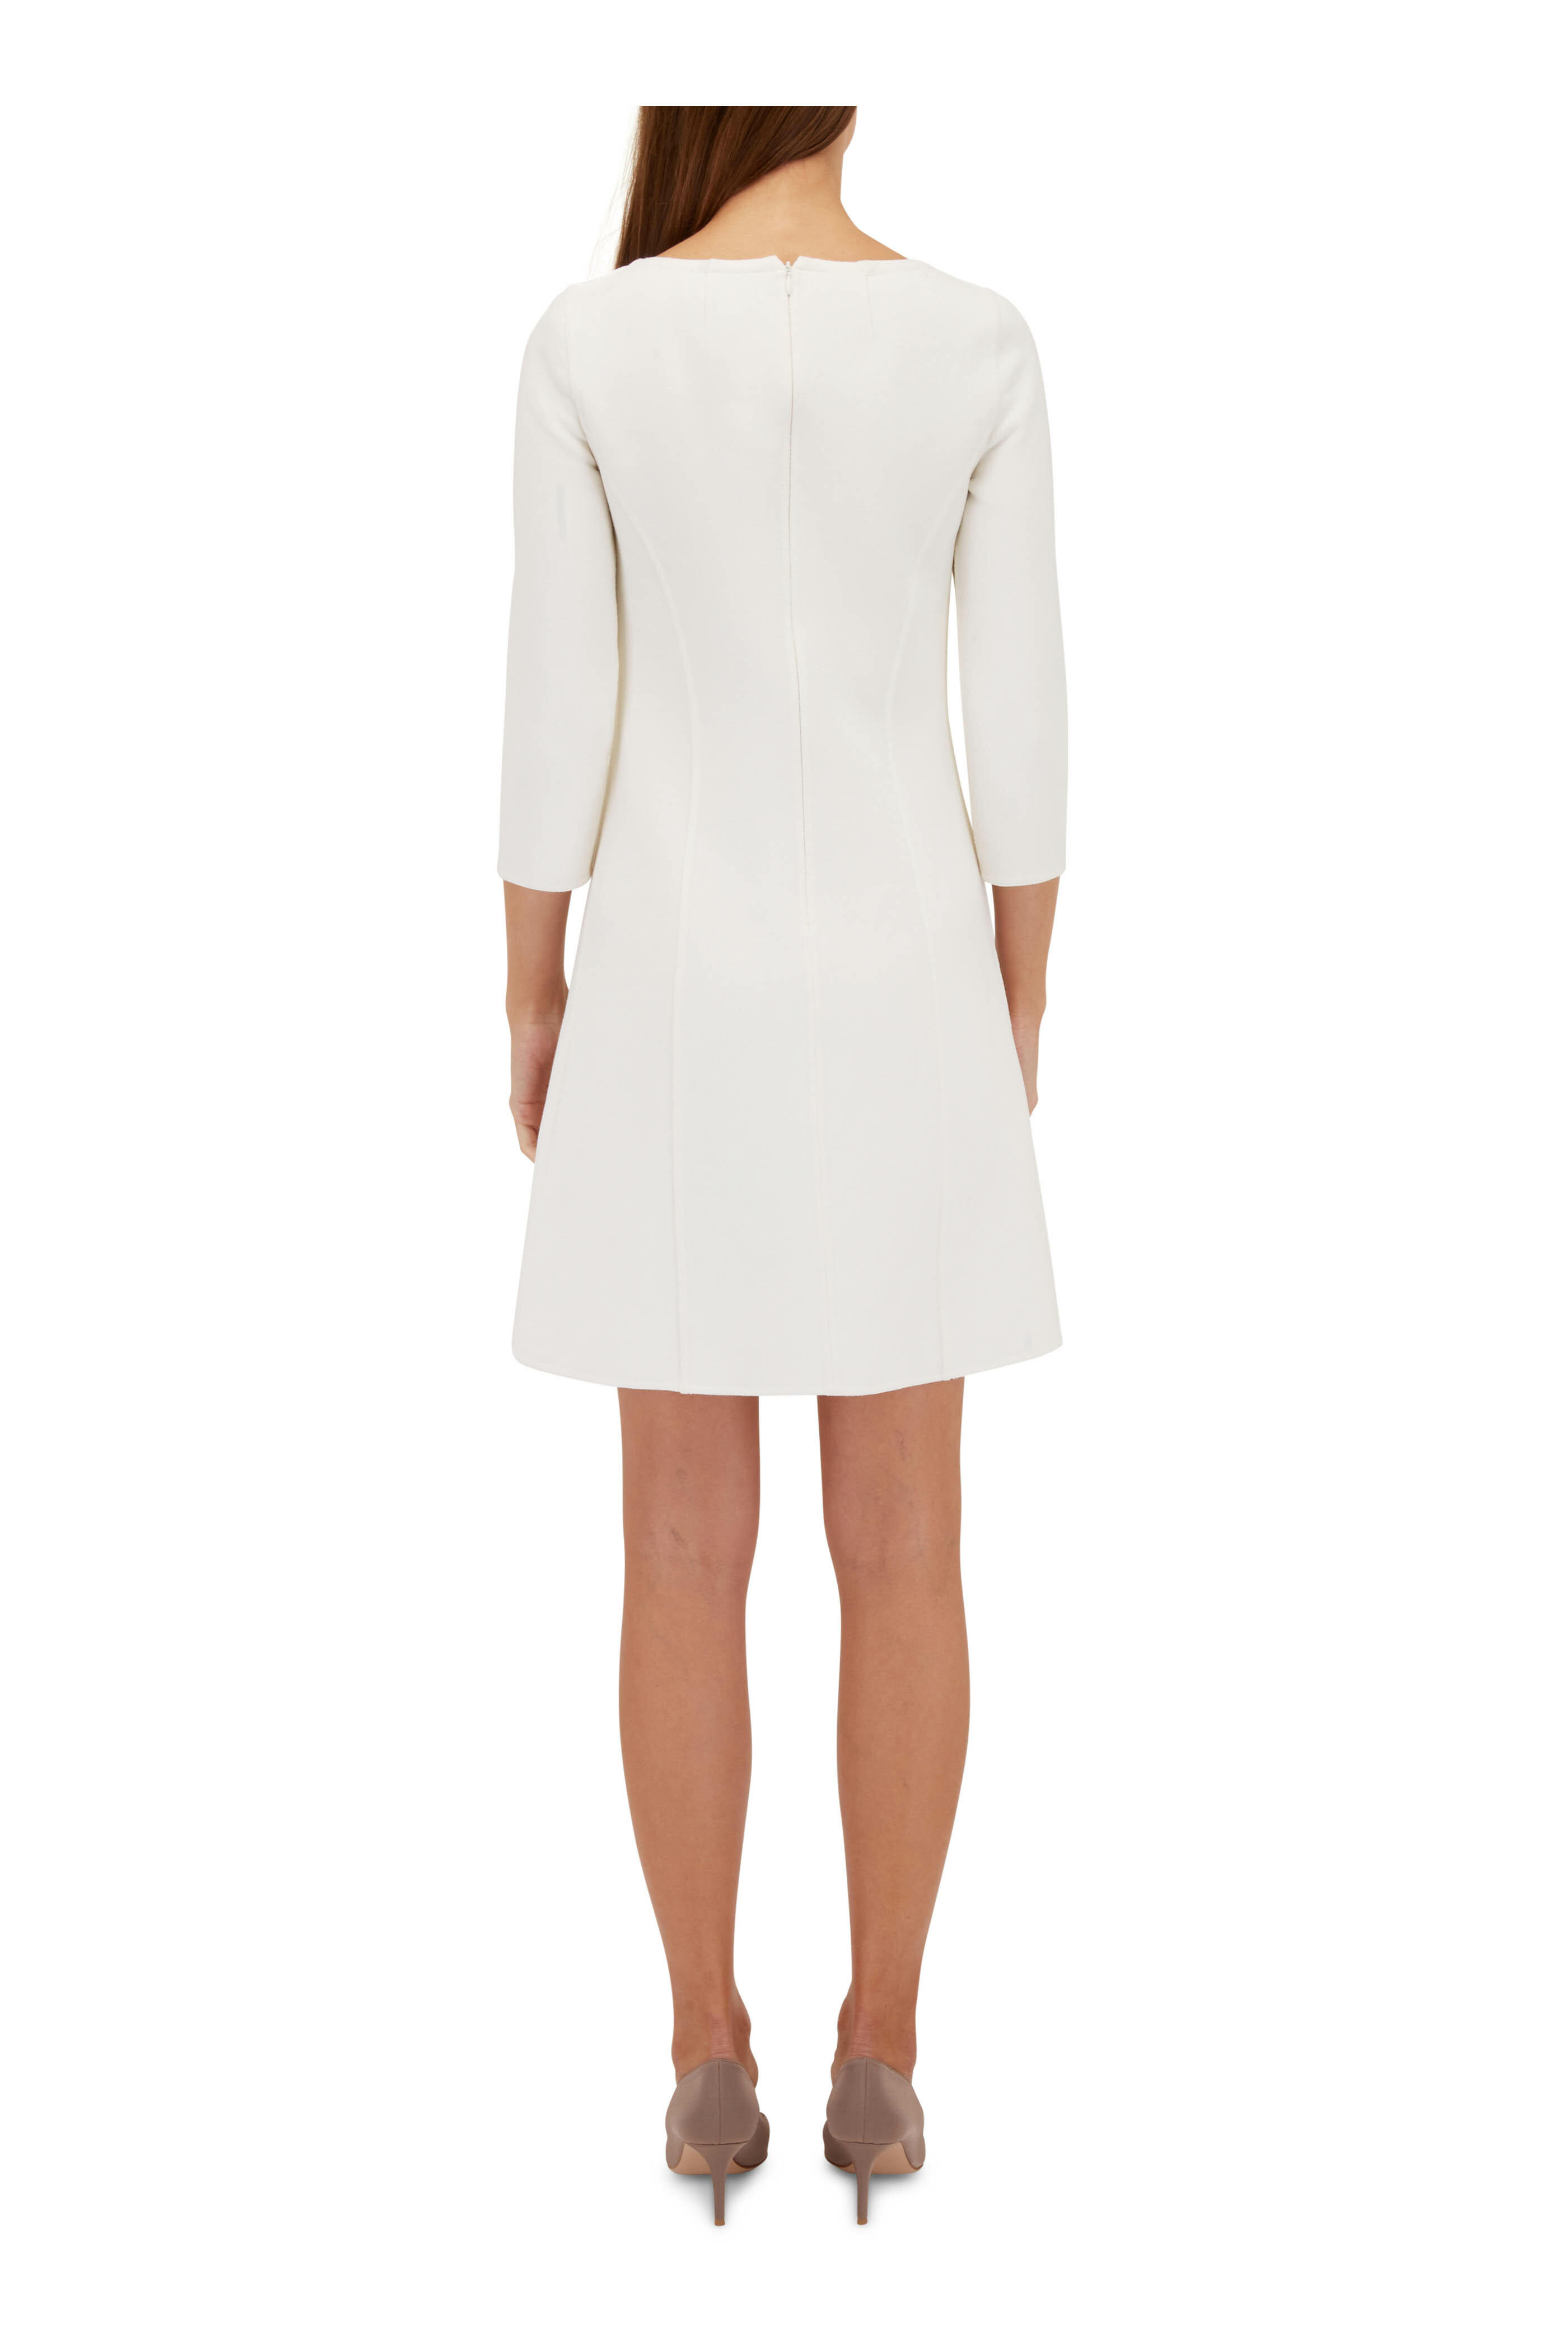 Michael Kors Collection - White Wool Three-Quarter Sleeve Shift Dress